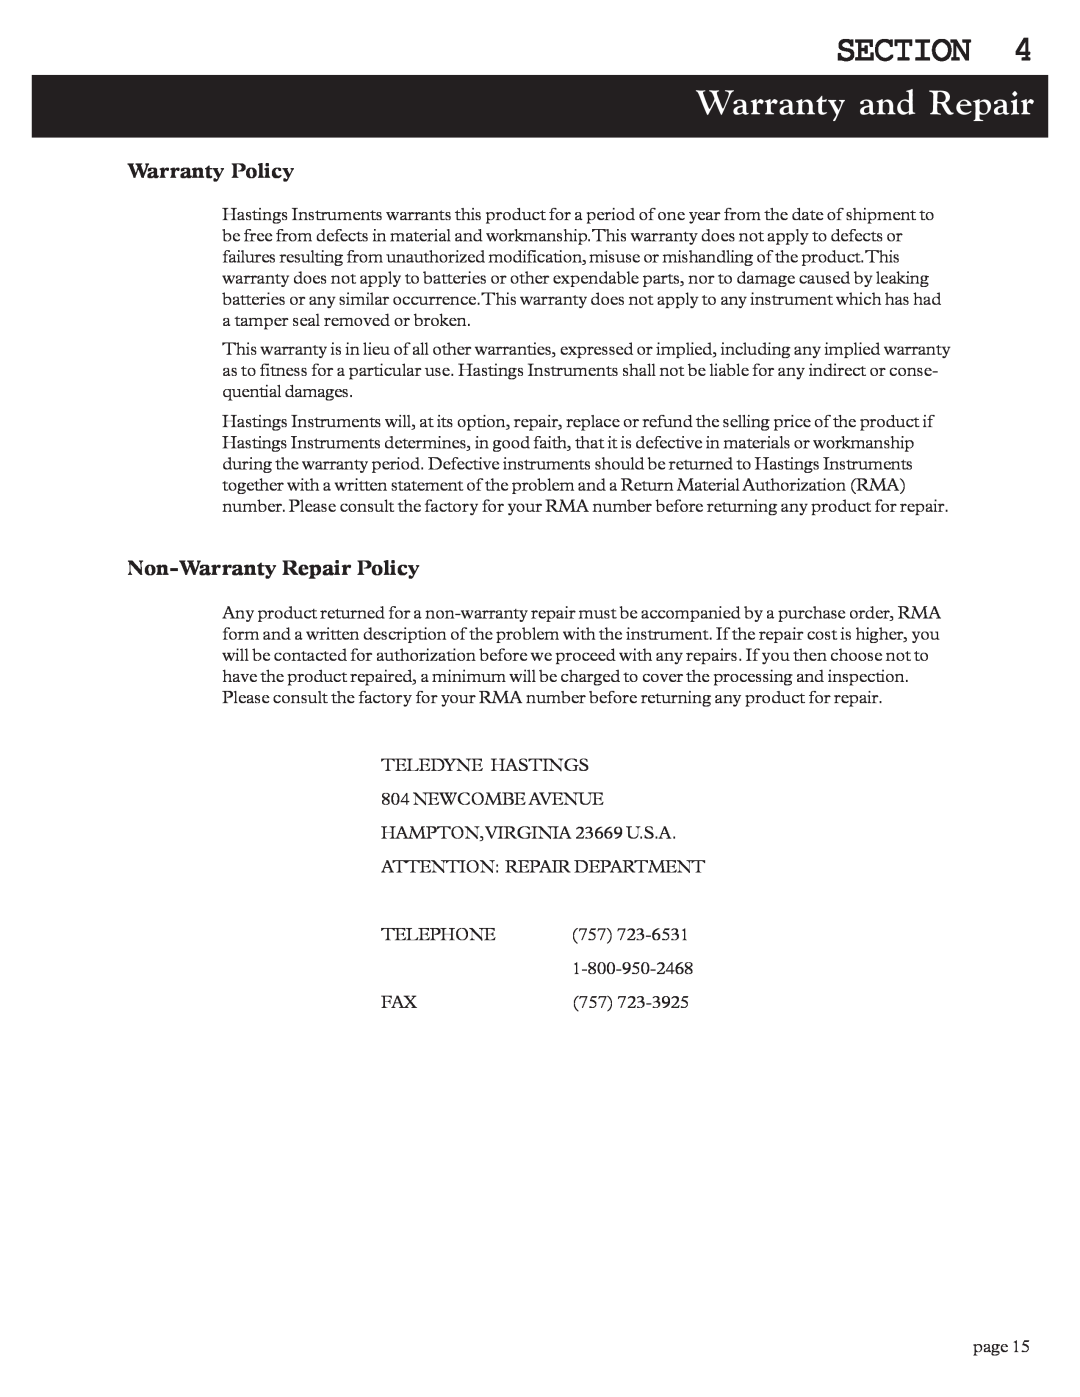 Teledyne HPS-10 instruction manual Warranty and Repair, Warranty Policy, Non-Warranty Repair Policy, Section 